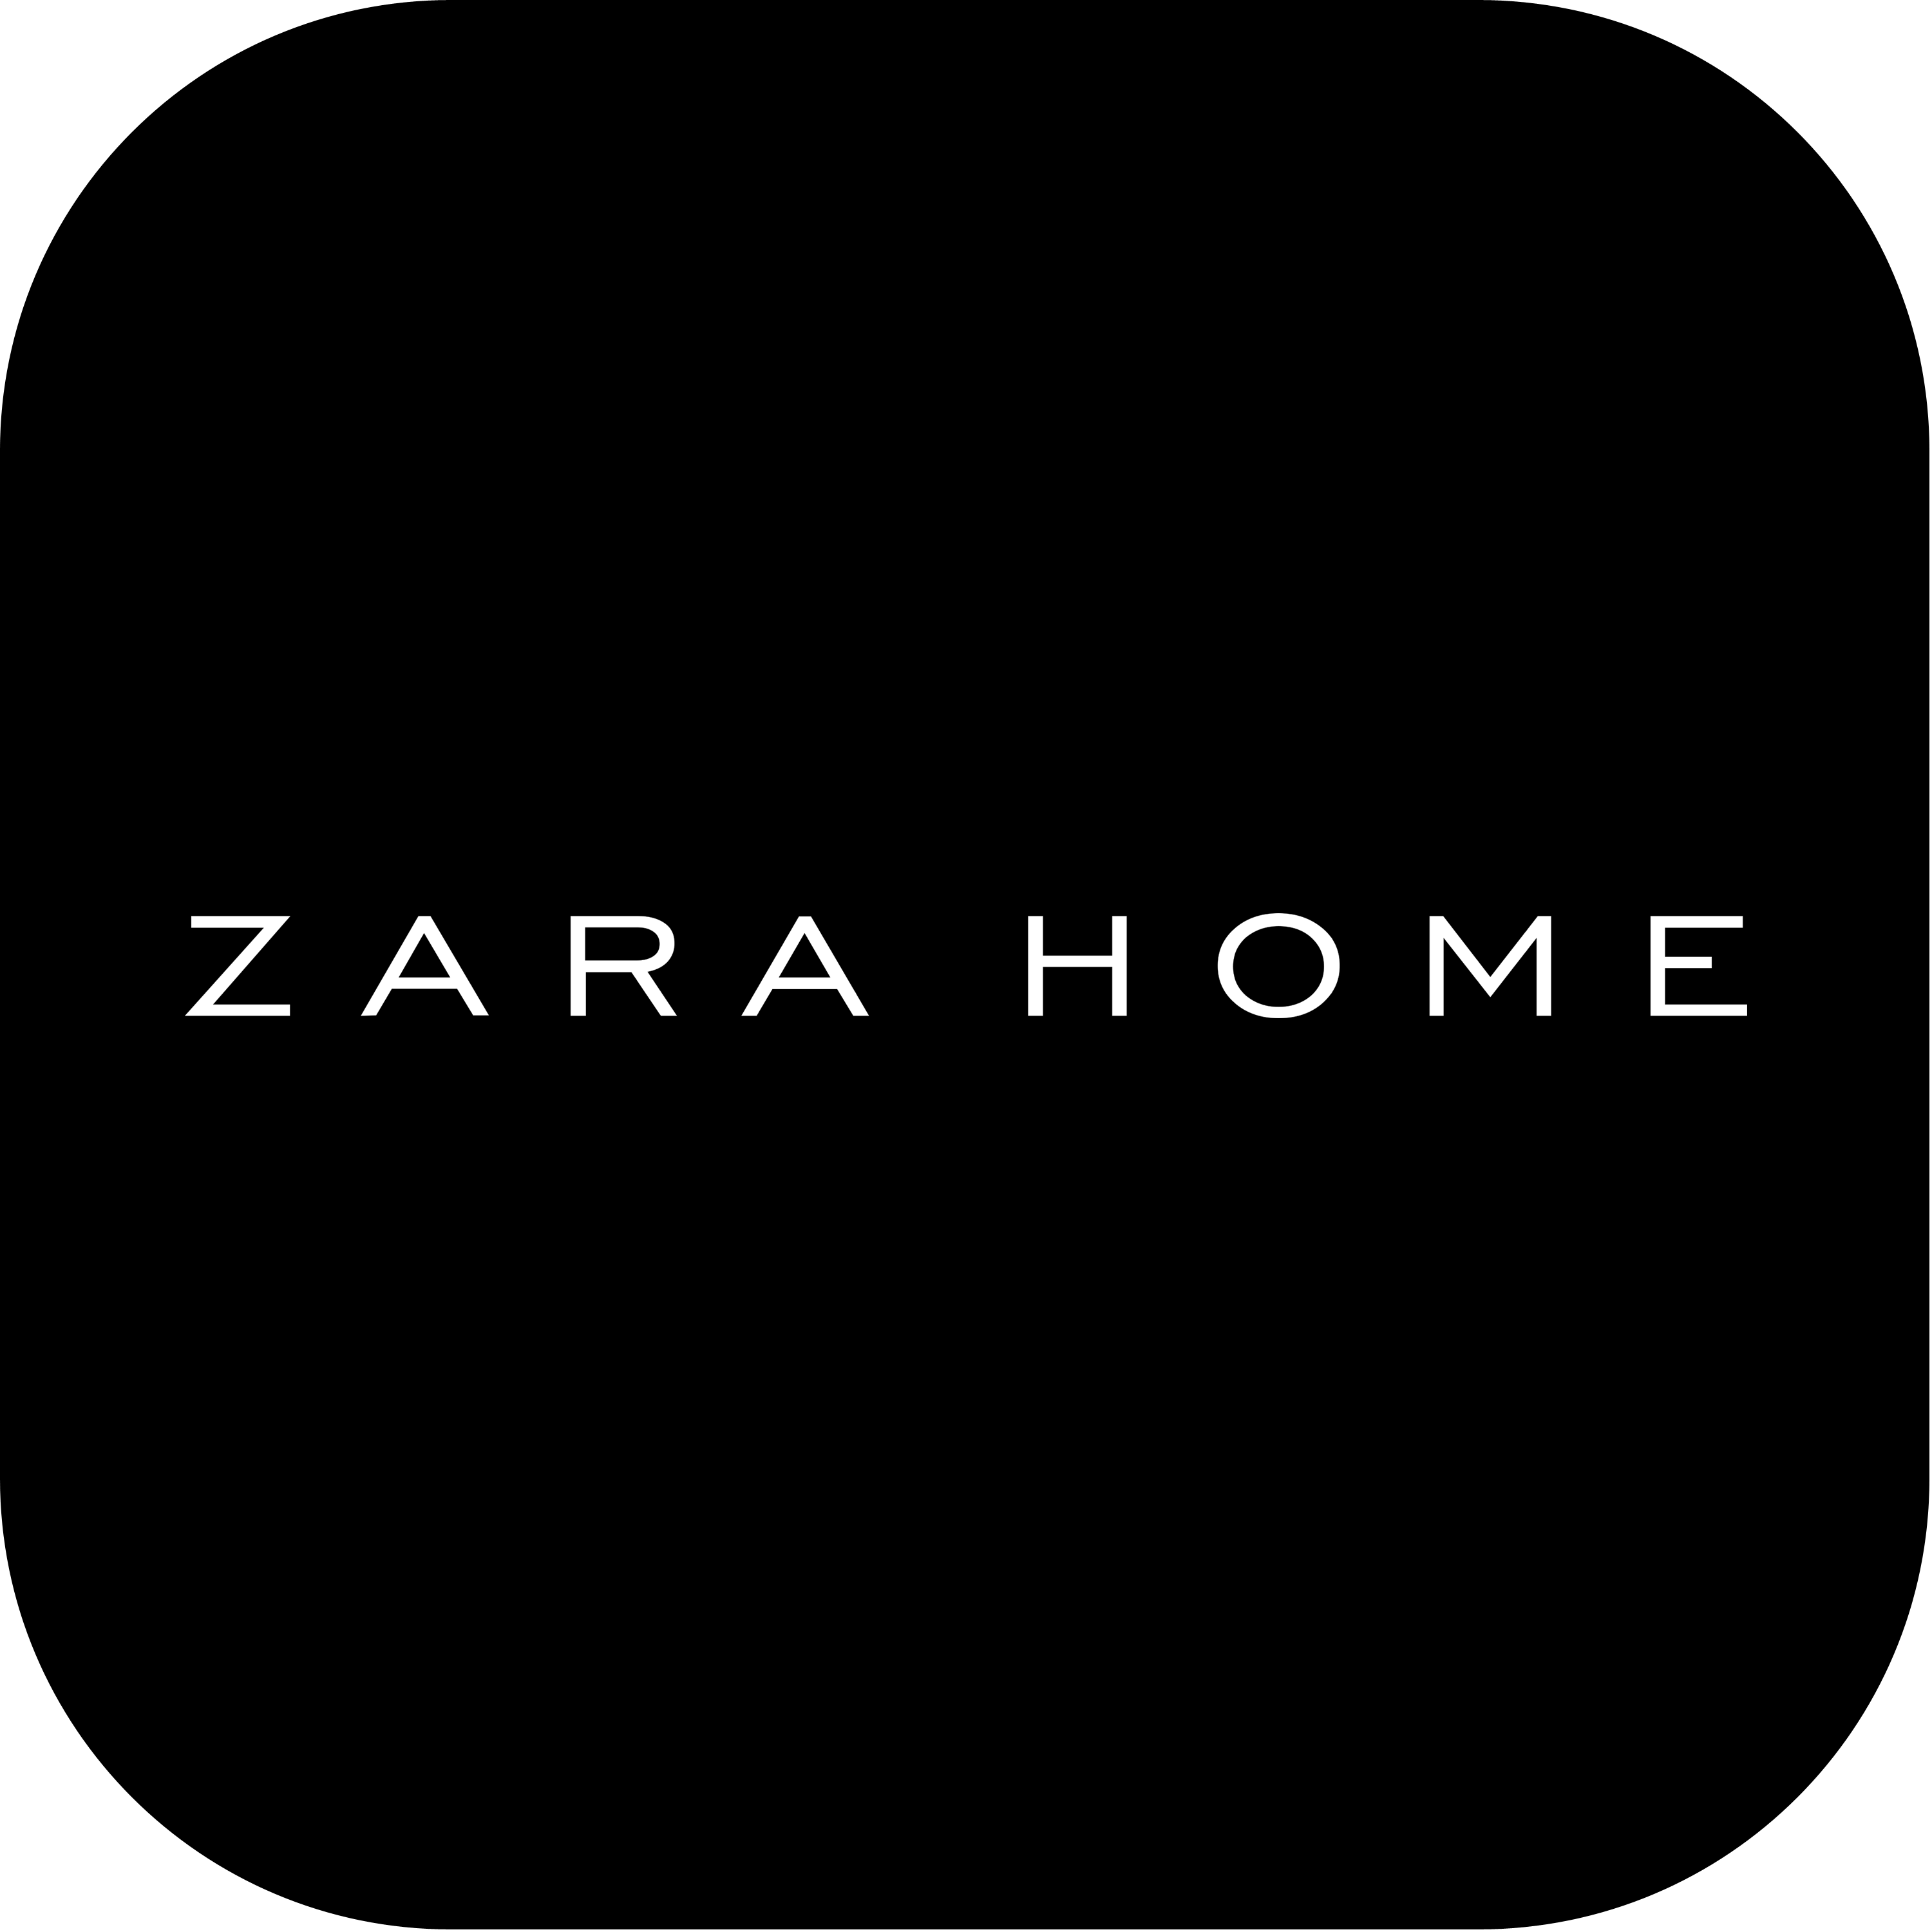 Zara Home Logo Transparent Picture